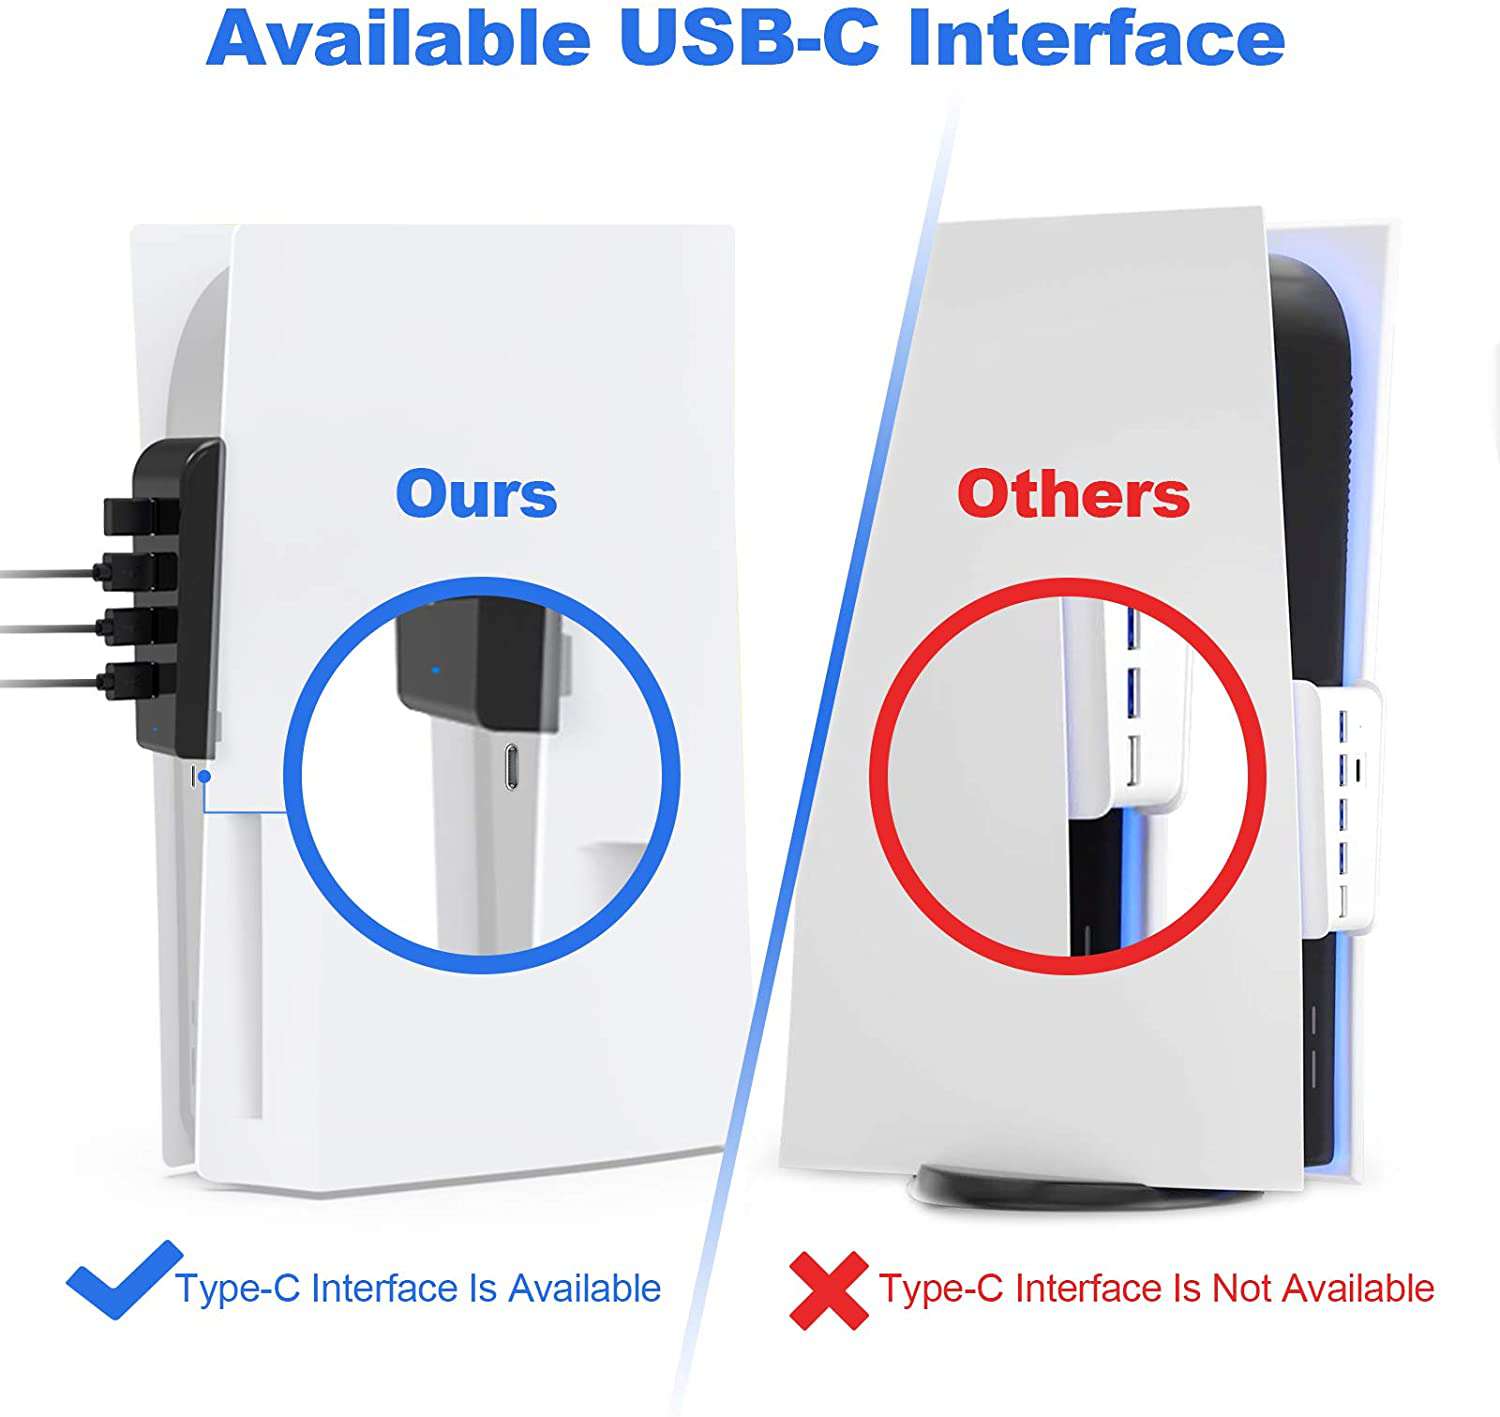 NexiGo USB Hub uses USB-C interface, not occupying PS5 main Type-C port.